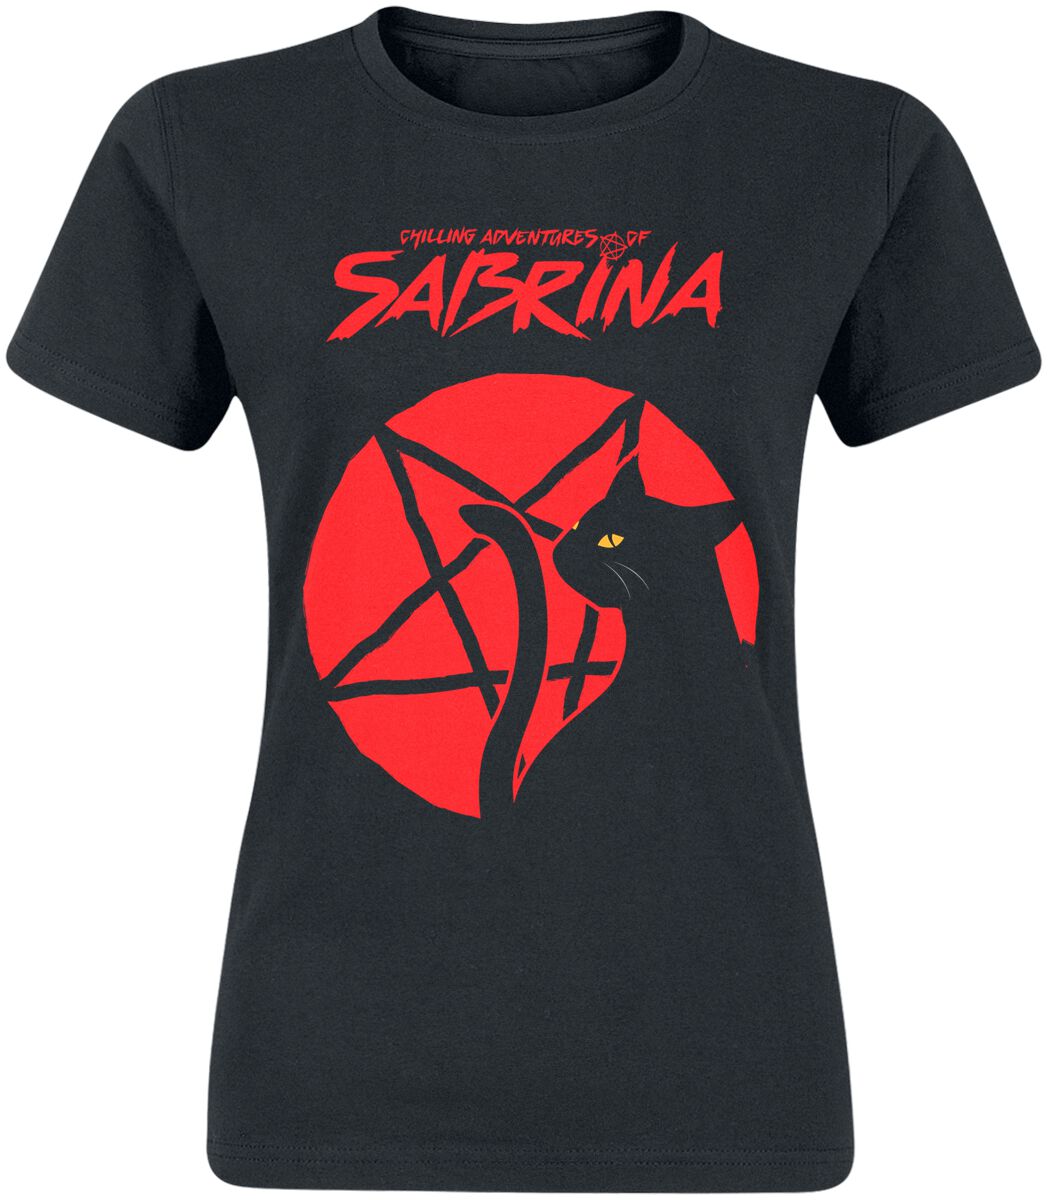 Chilling Adventures of Sabrina Salem T-Shirt black